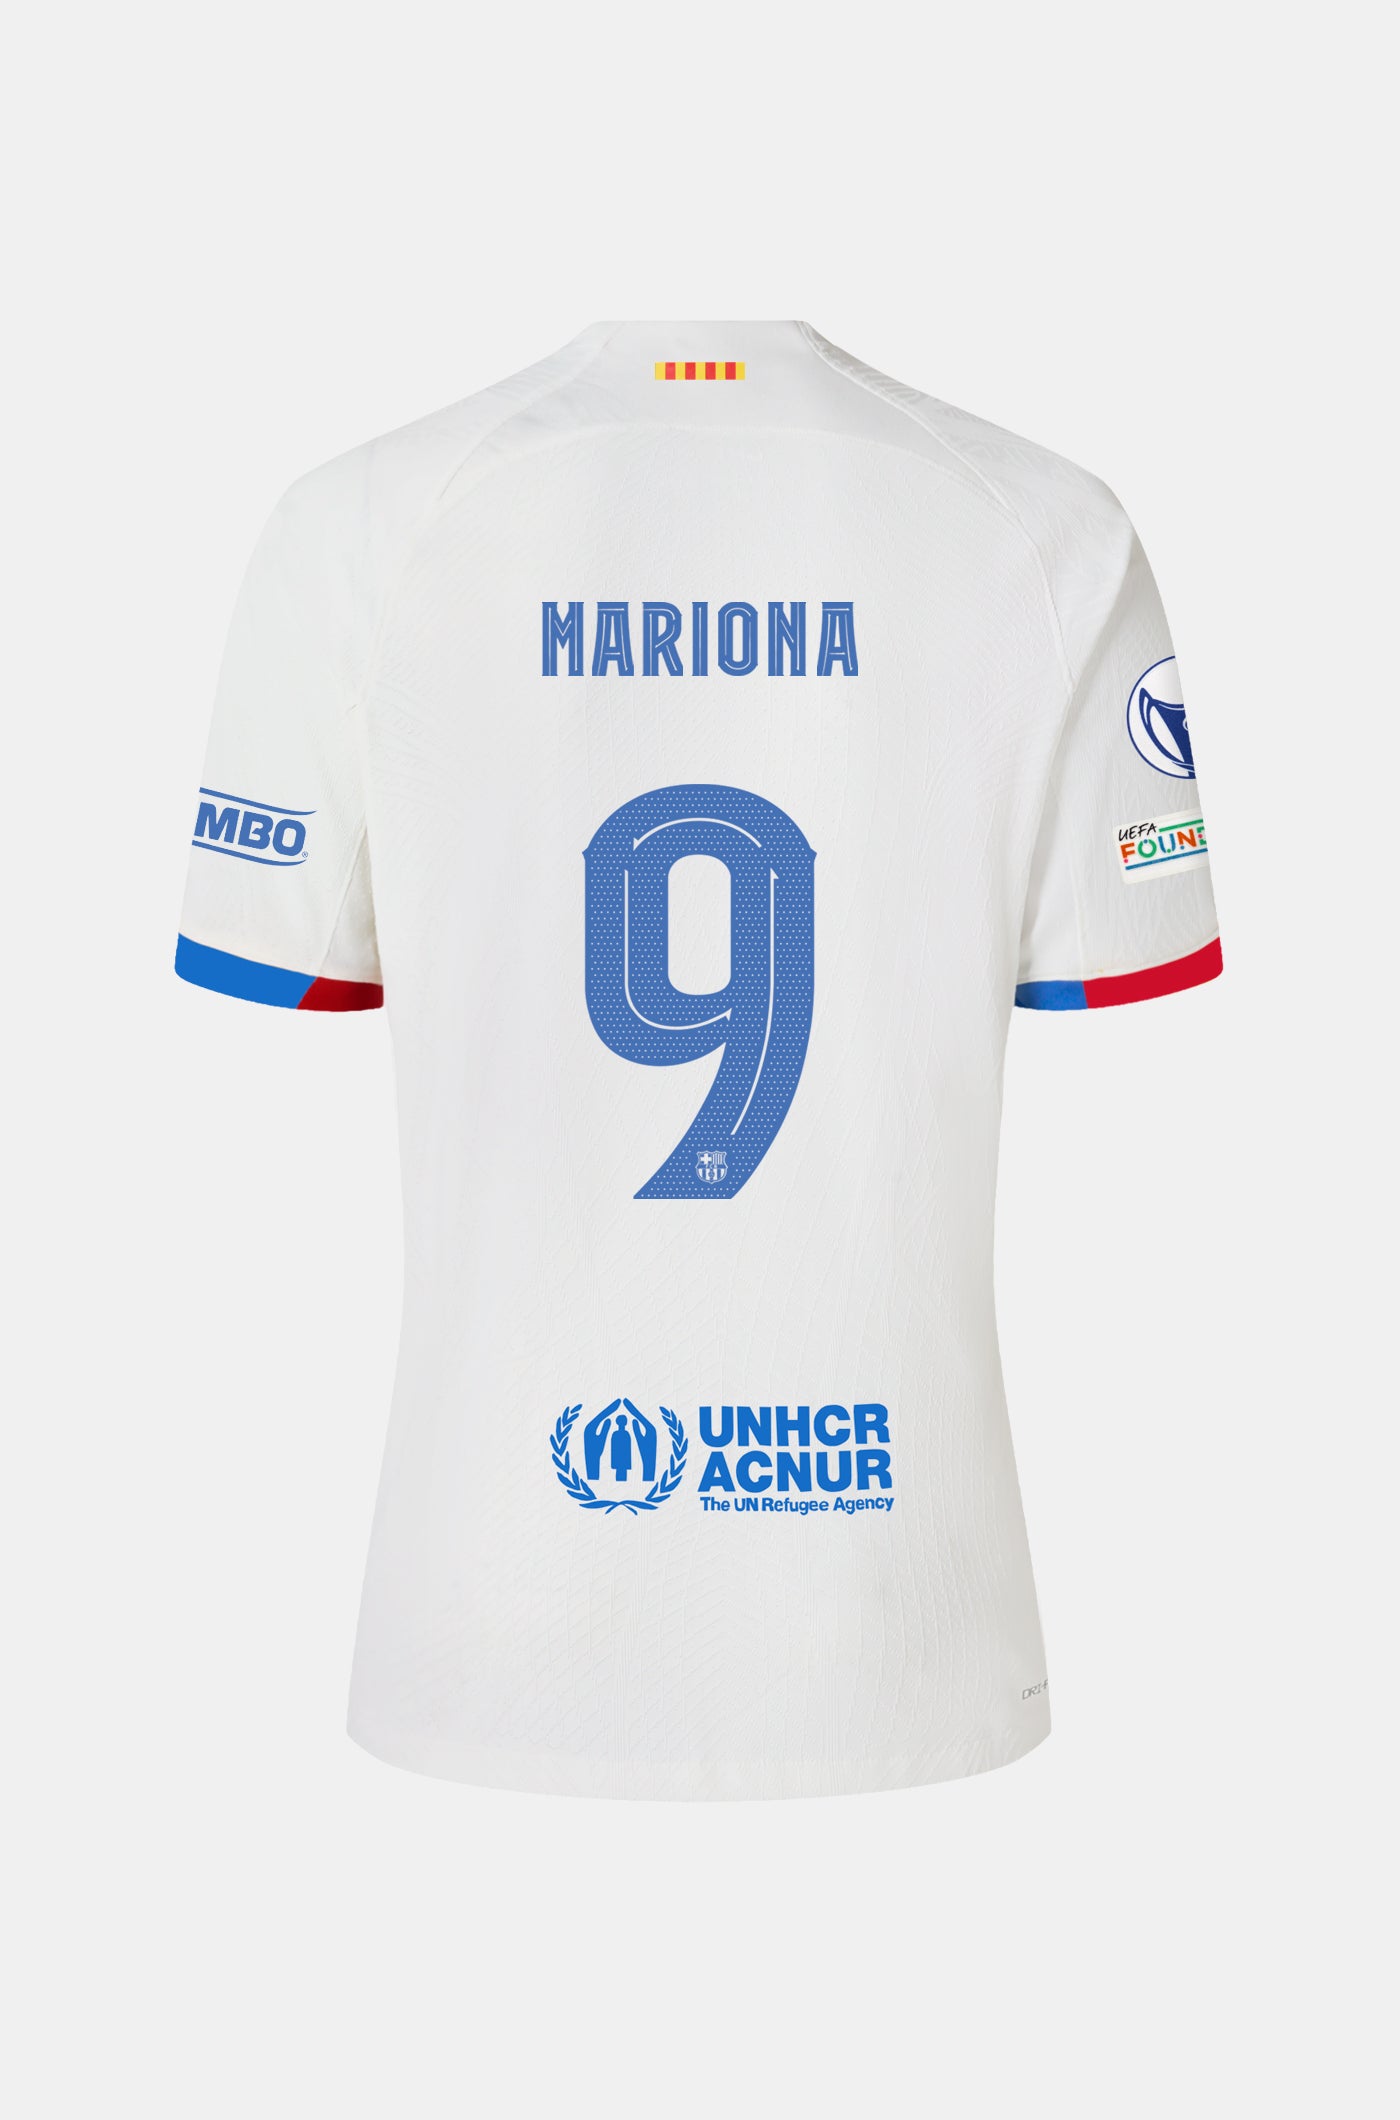 UWCL FC Barcelona away shirt 23/24 Player's Edition - MARIONA